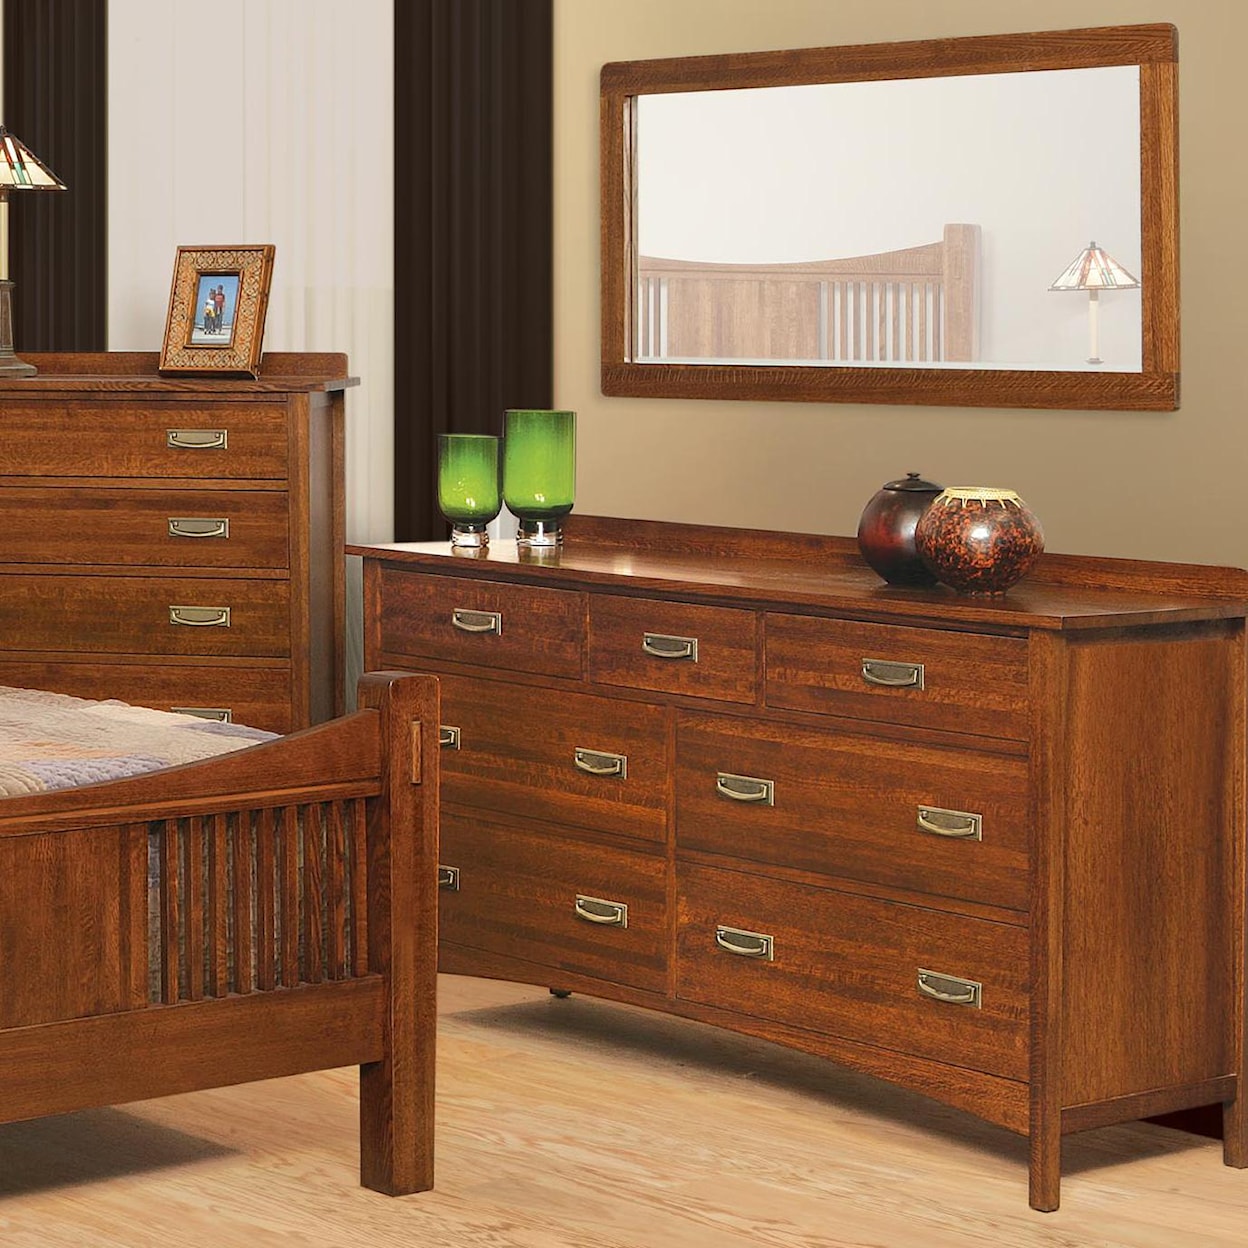 Witmer Furniture Heartland Dresser and Mirror